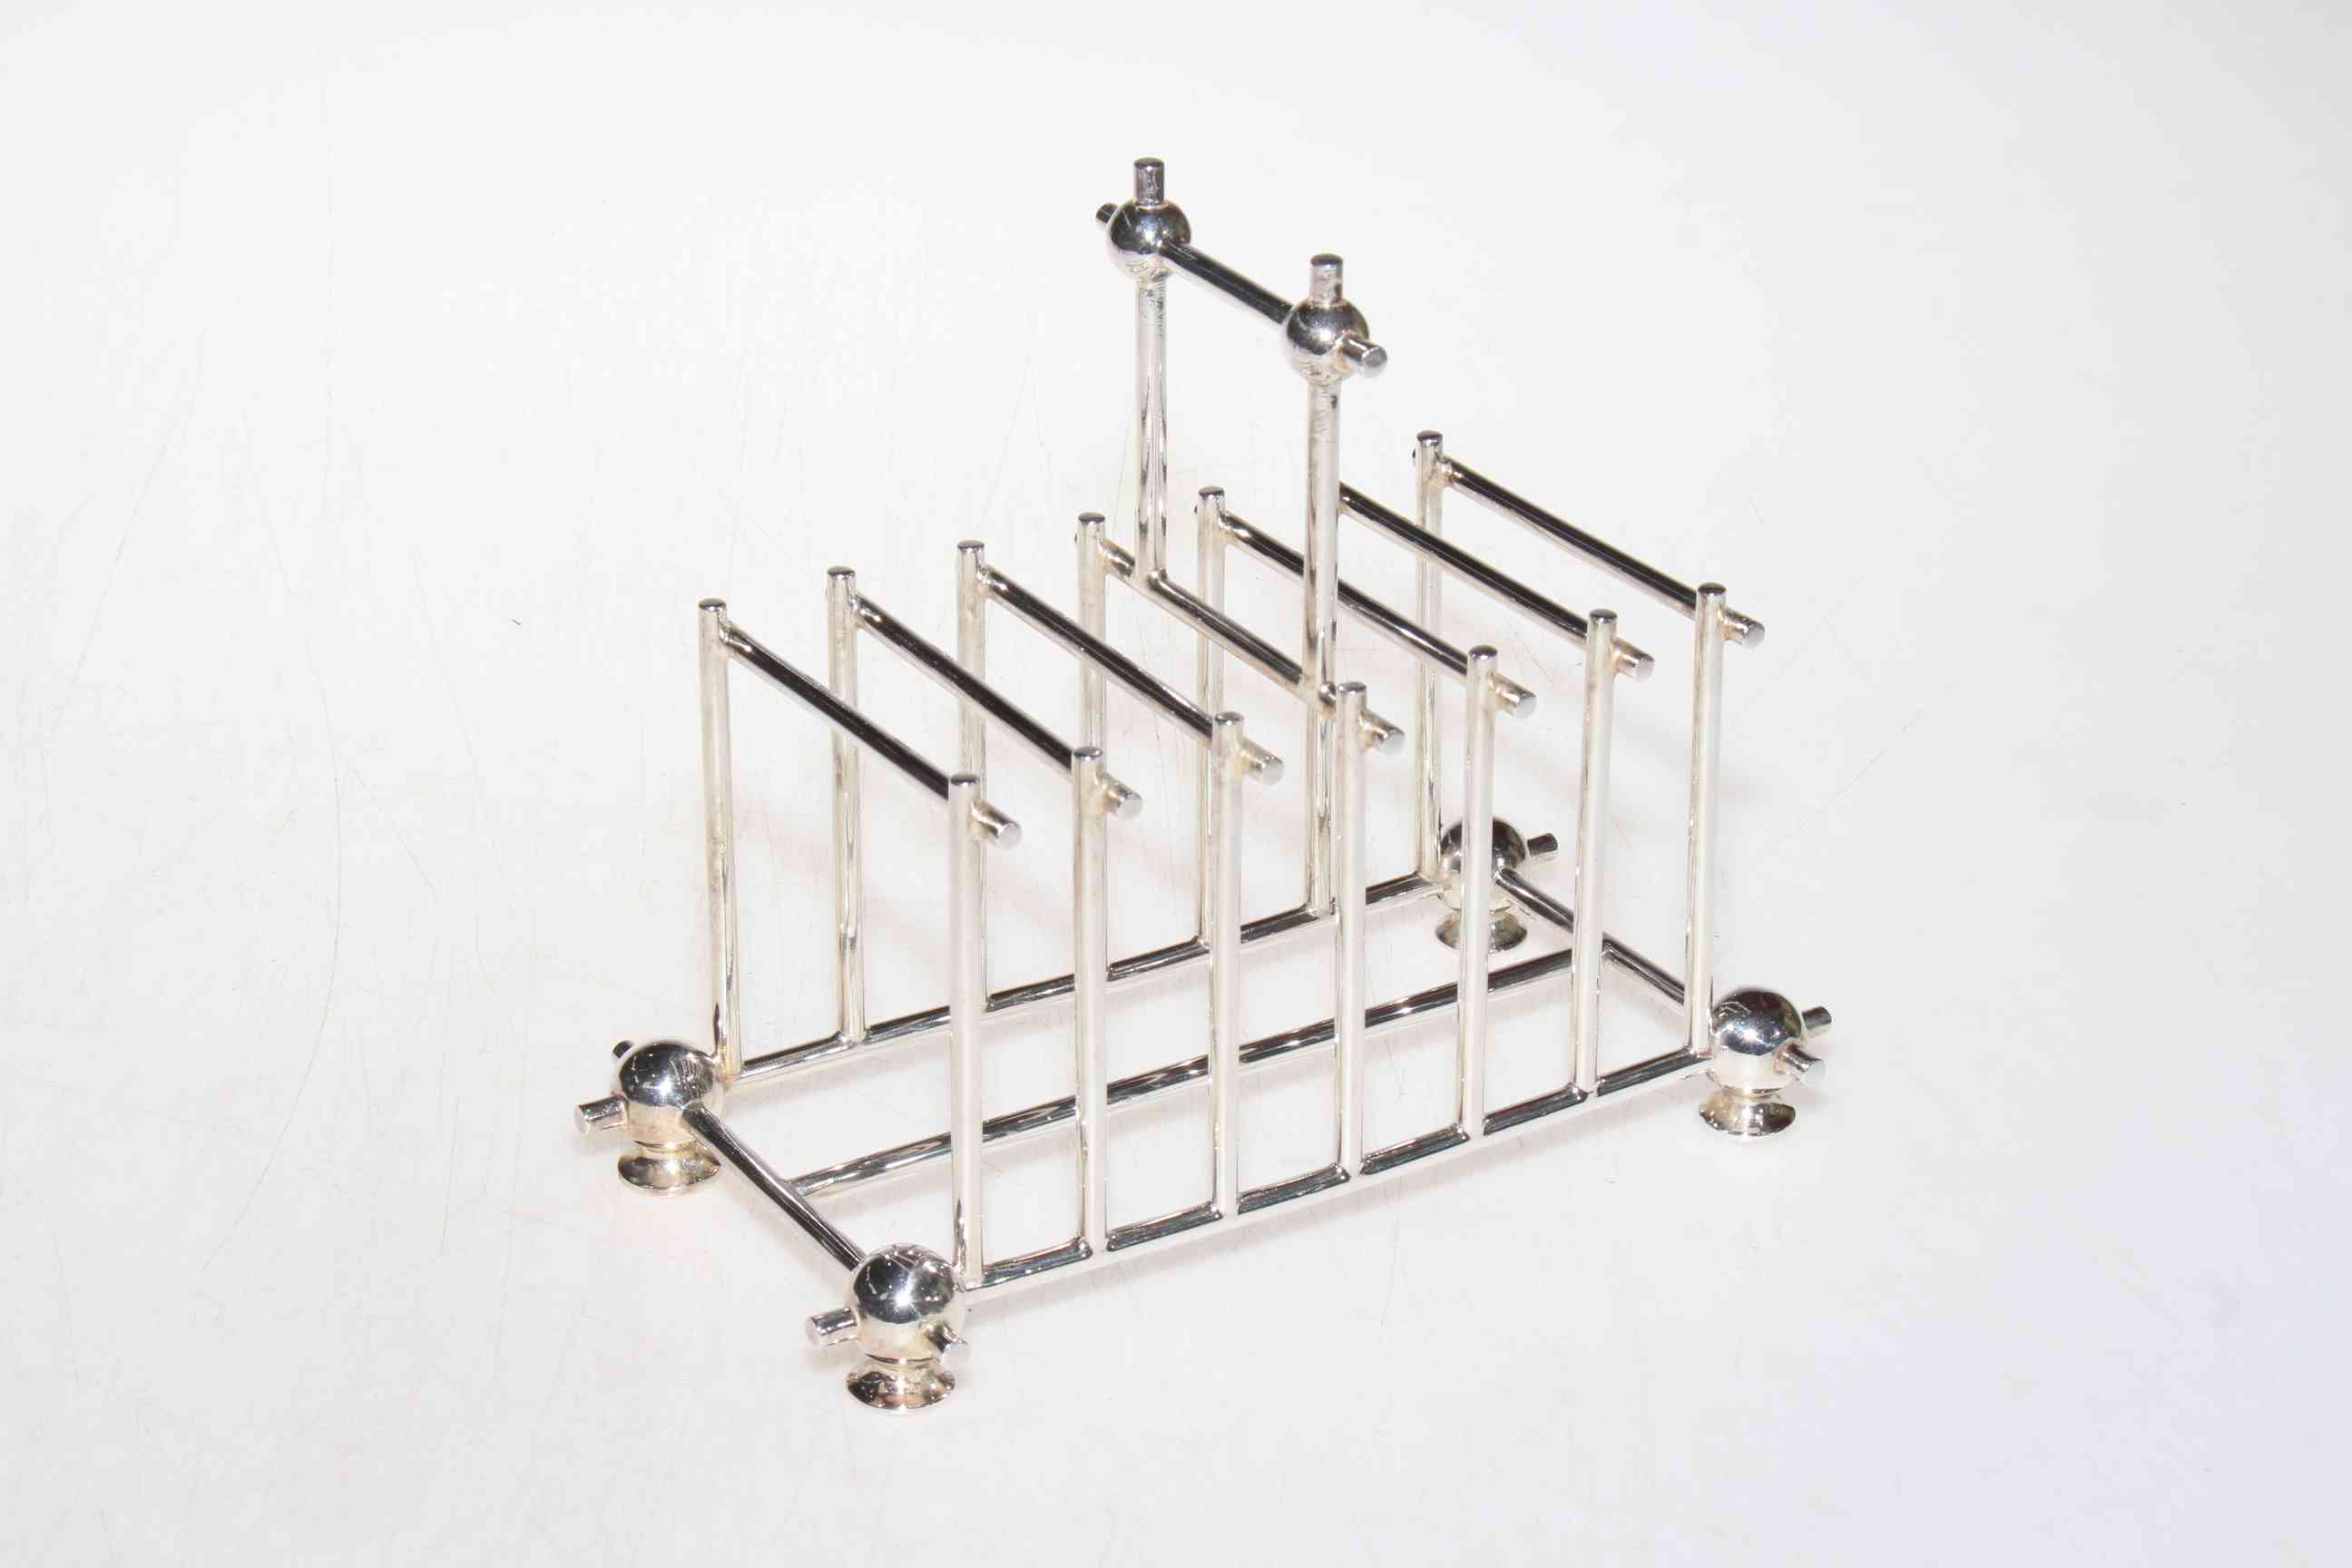 Silver plated seven bar toast rack in Chr. Dresser design, 16cm high.